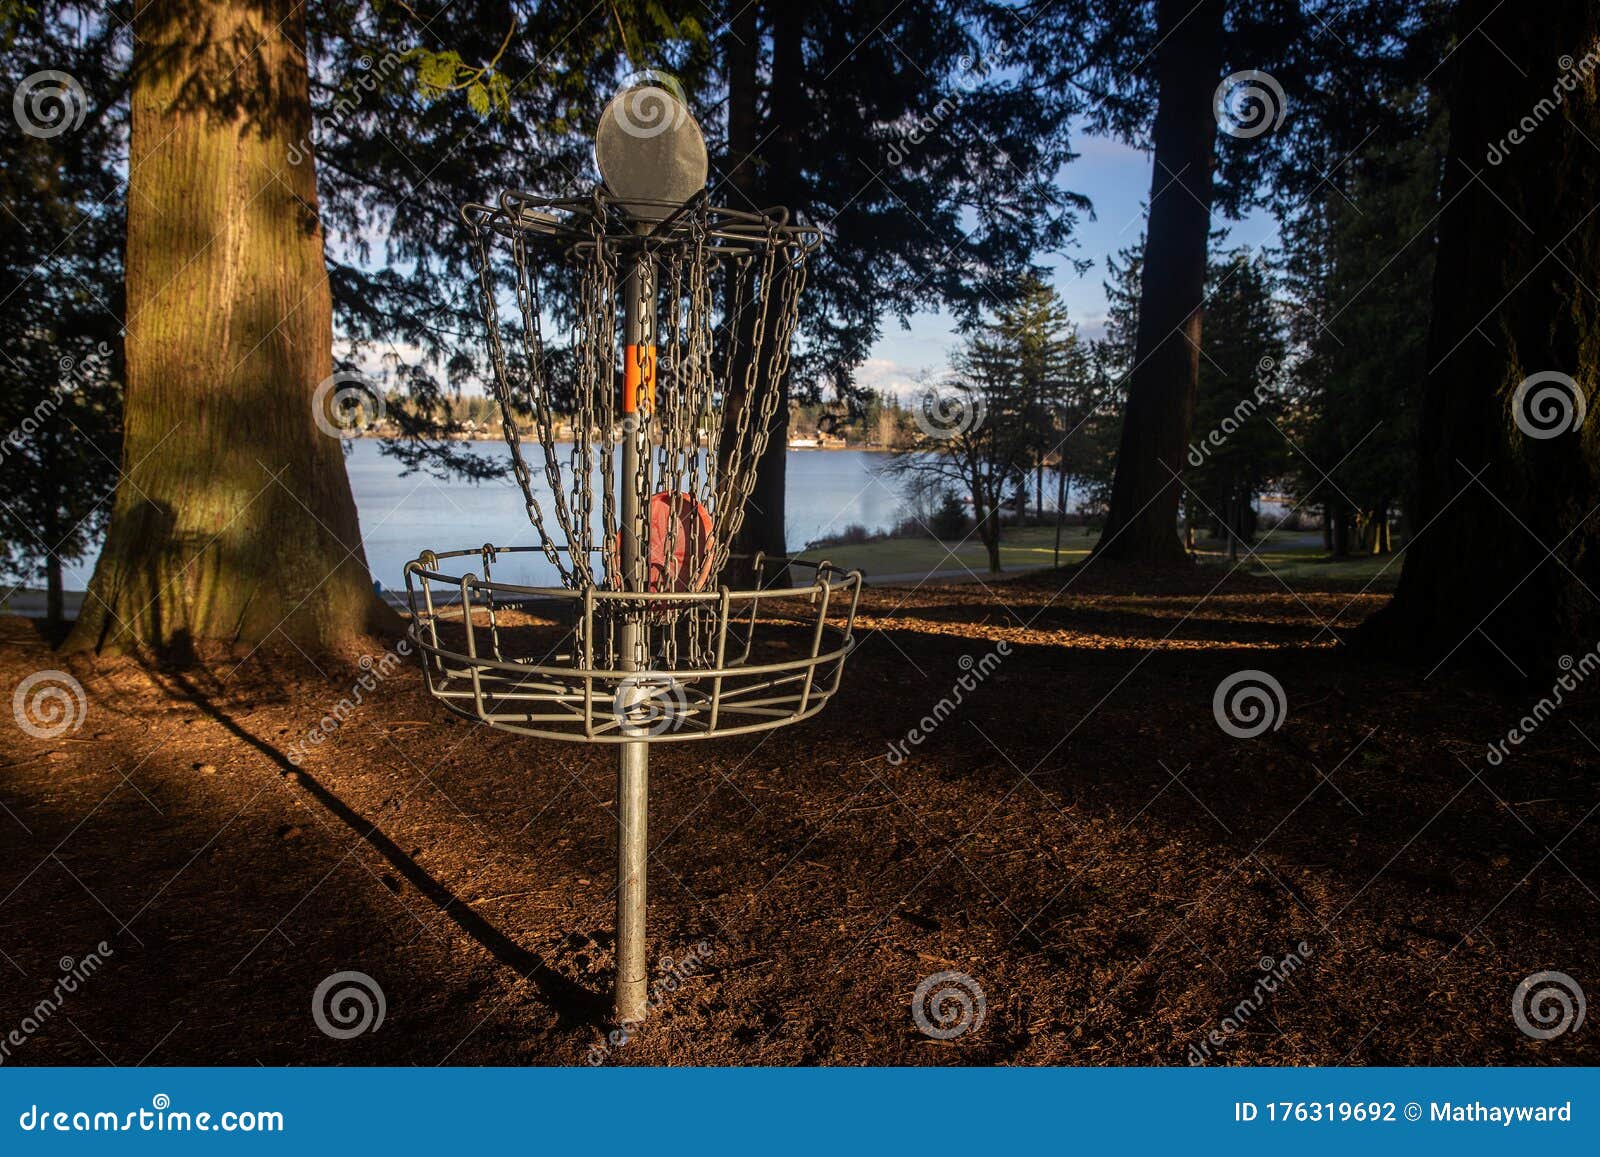 Disc Golf Basket On Pretty Park Course Near A Lake Under ...